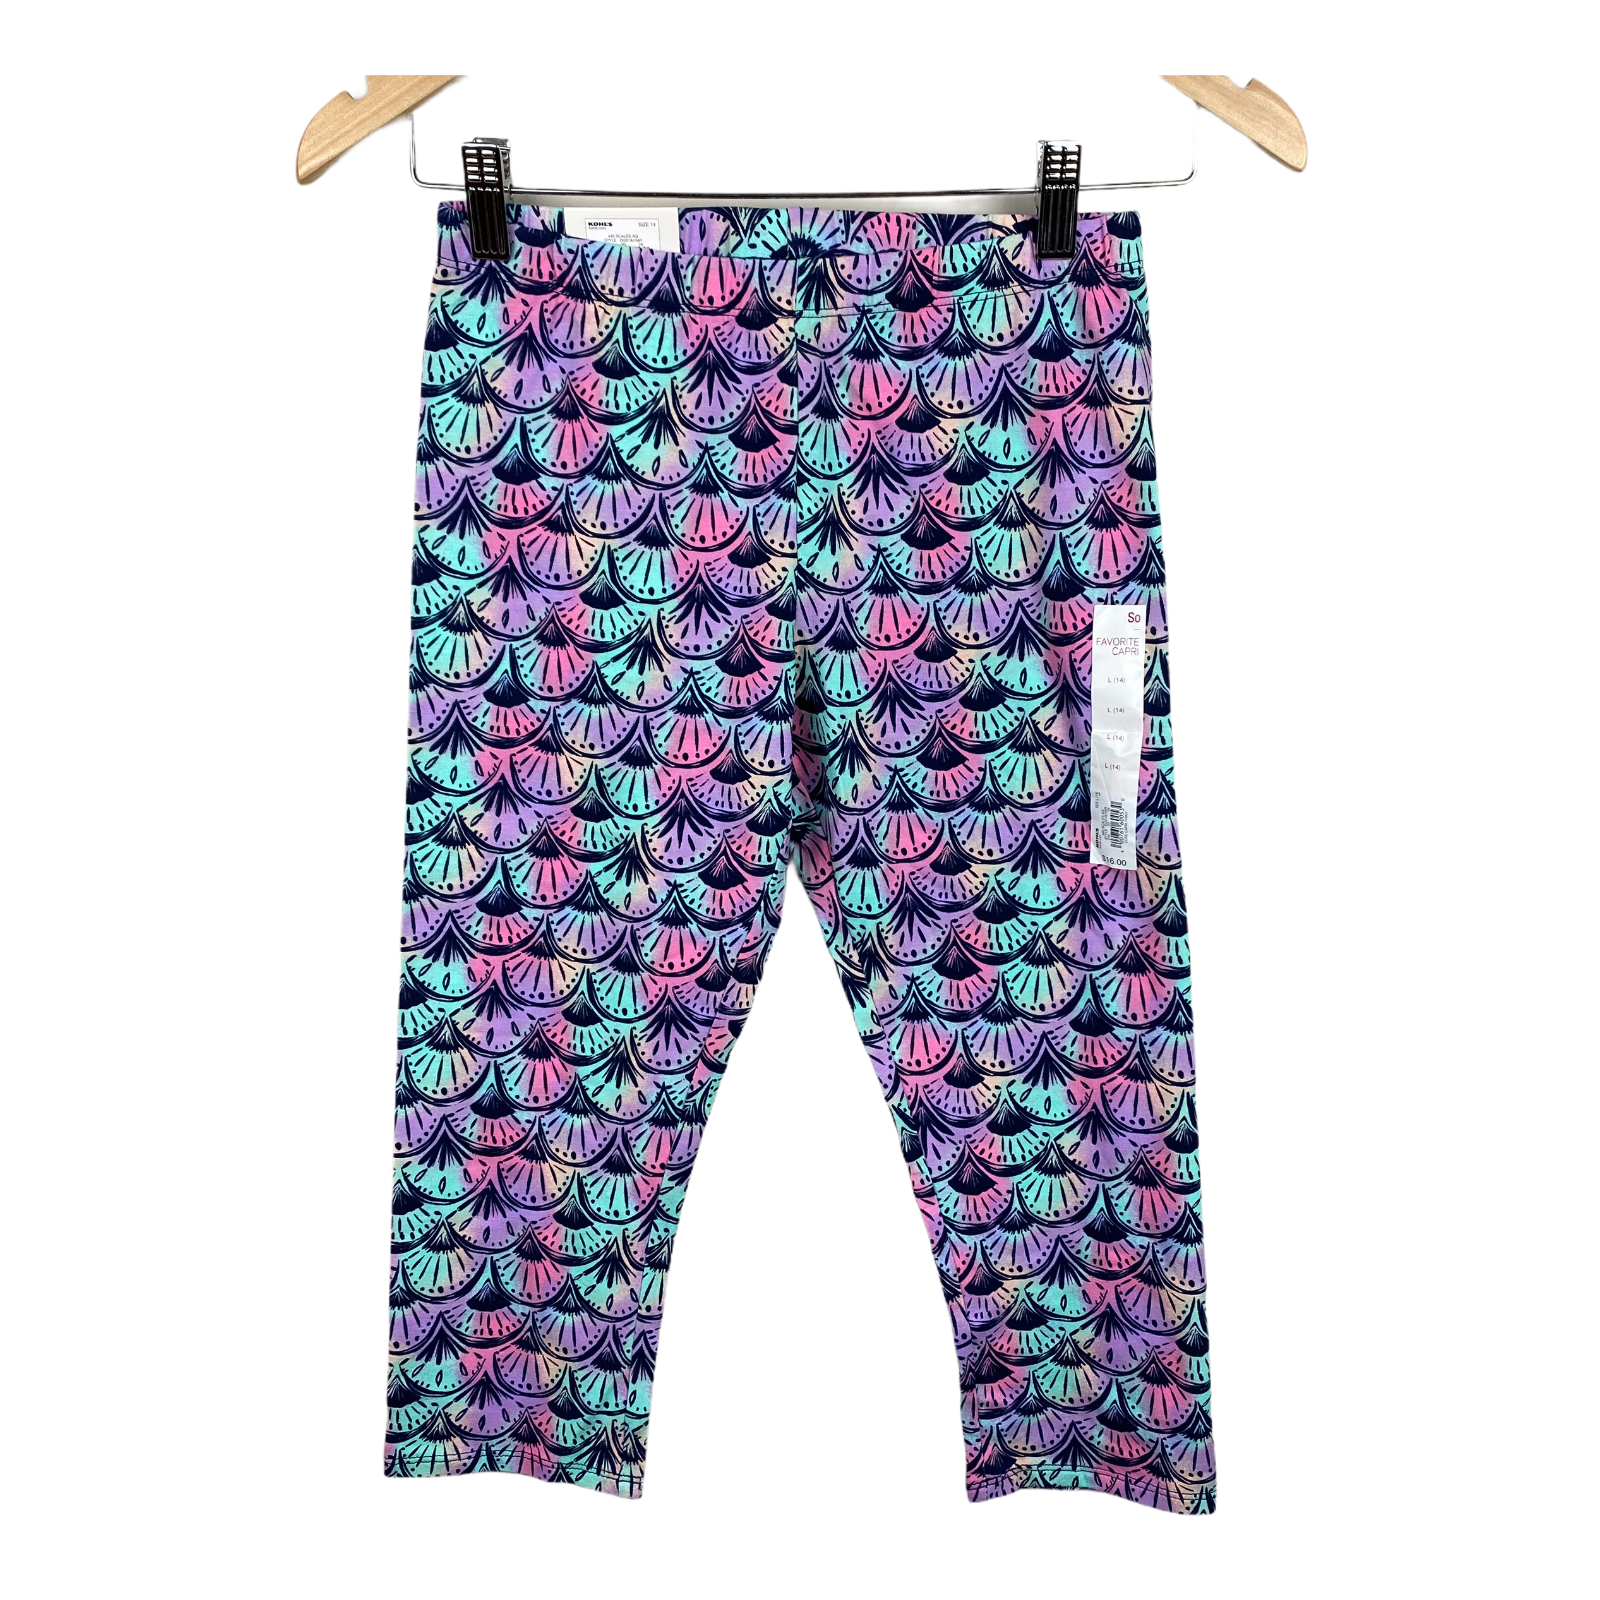 SO Favorite Capri Pants L 14 Girls Printed Multicolor Stretch Waist Pull On New - $15.20